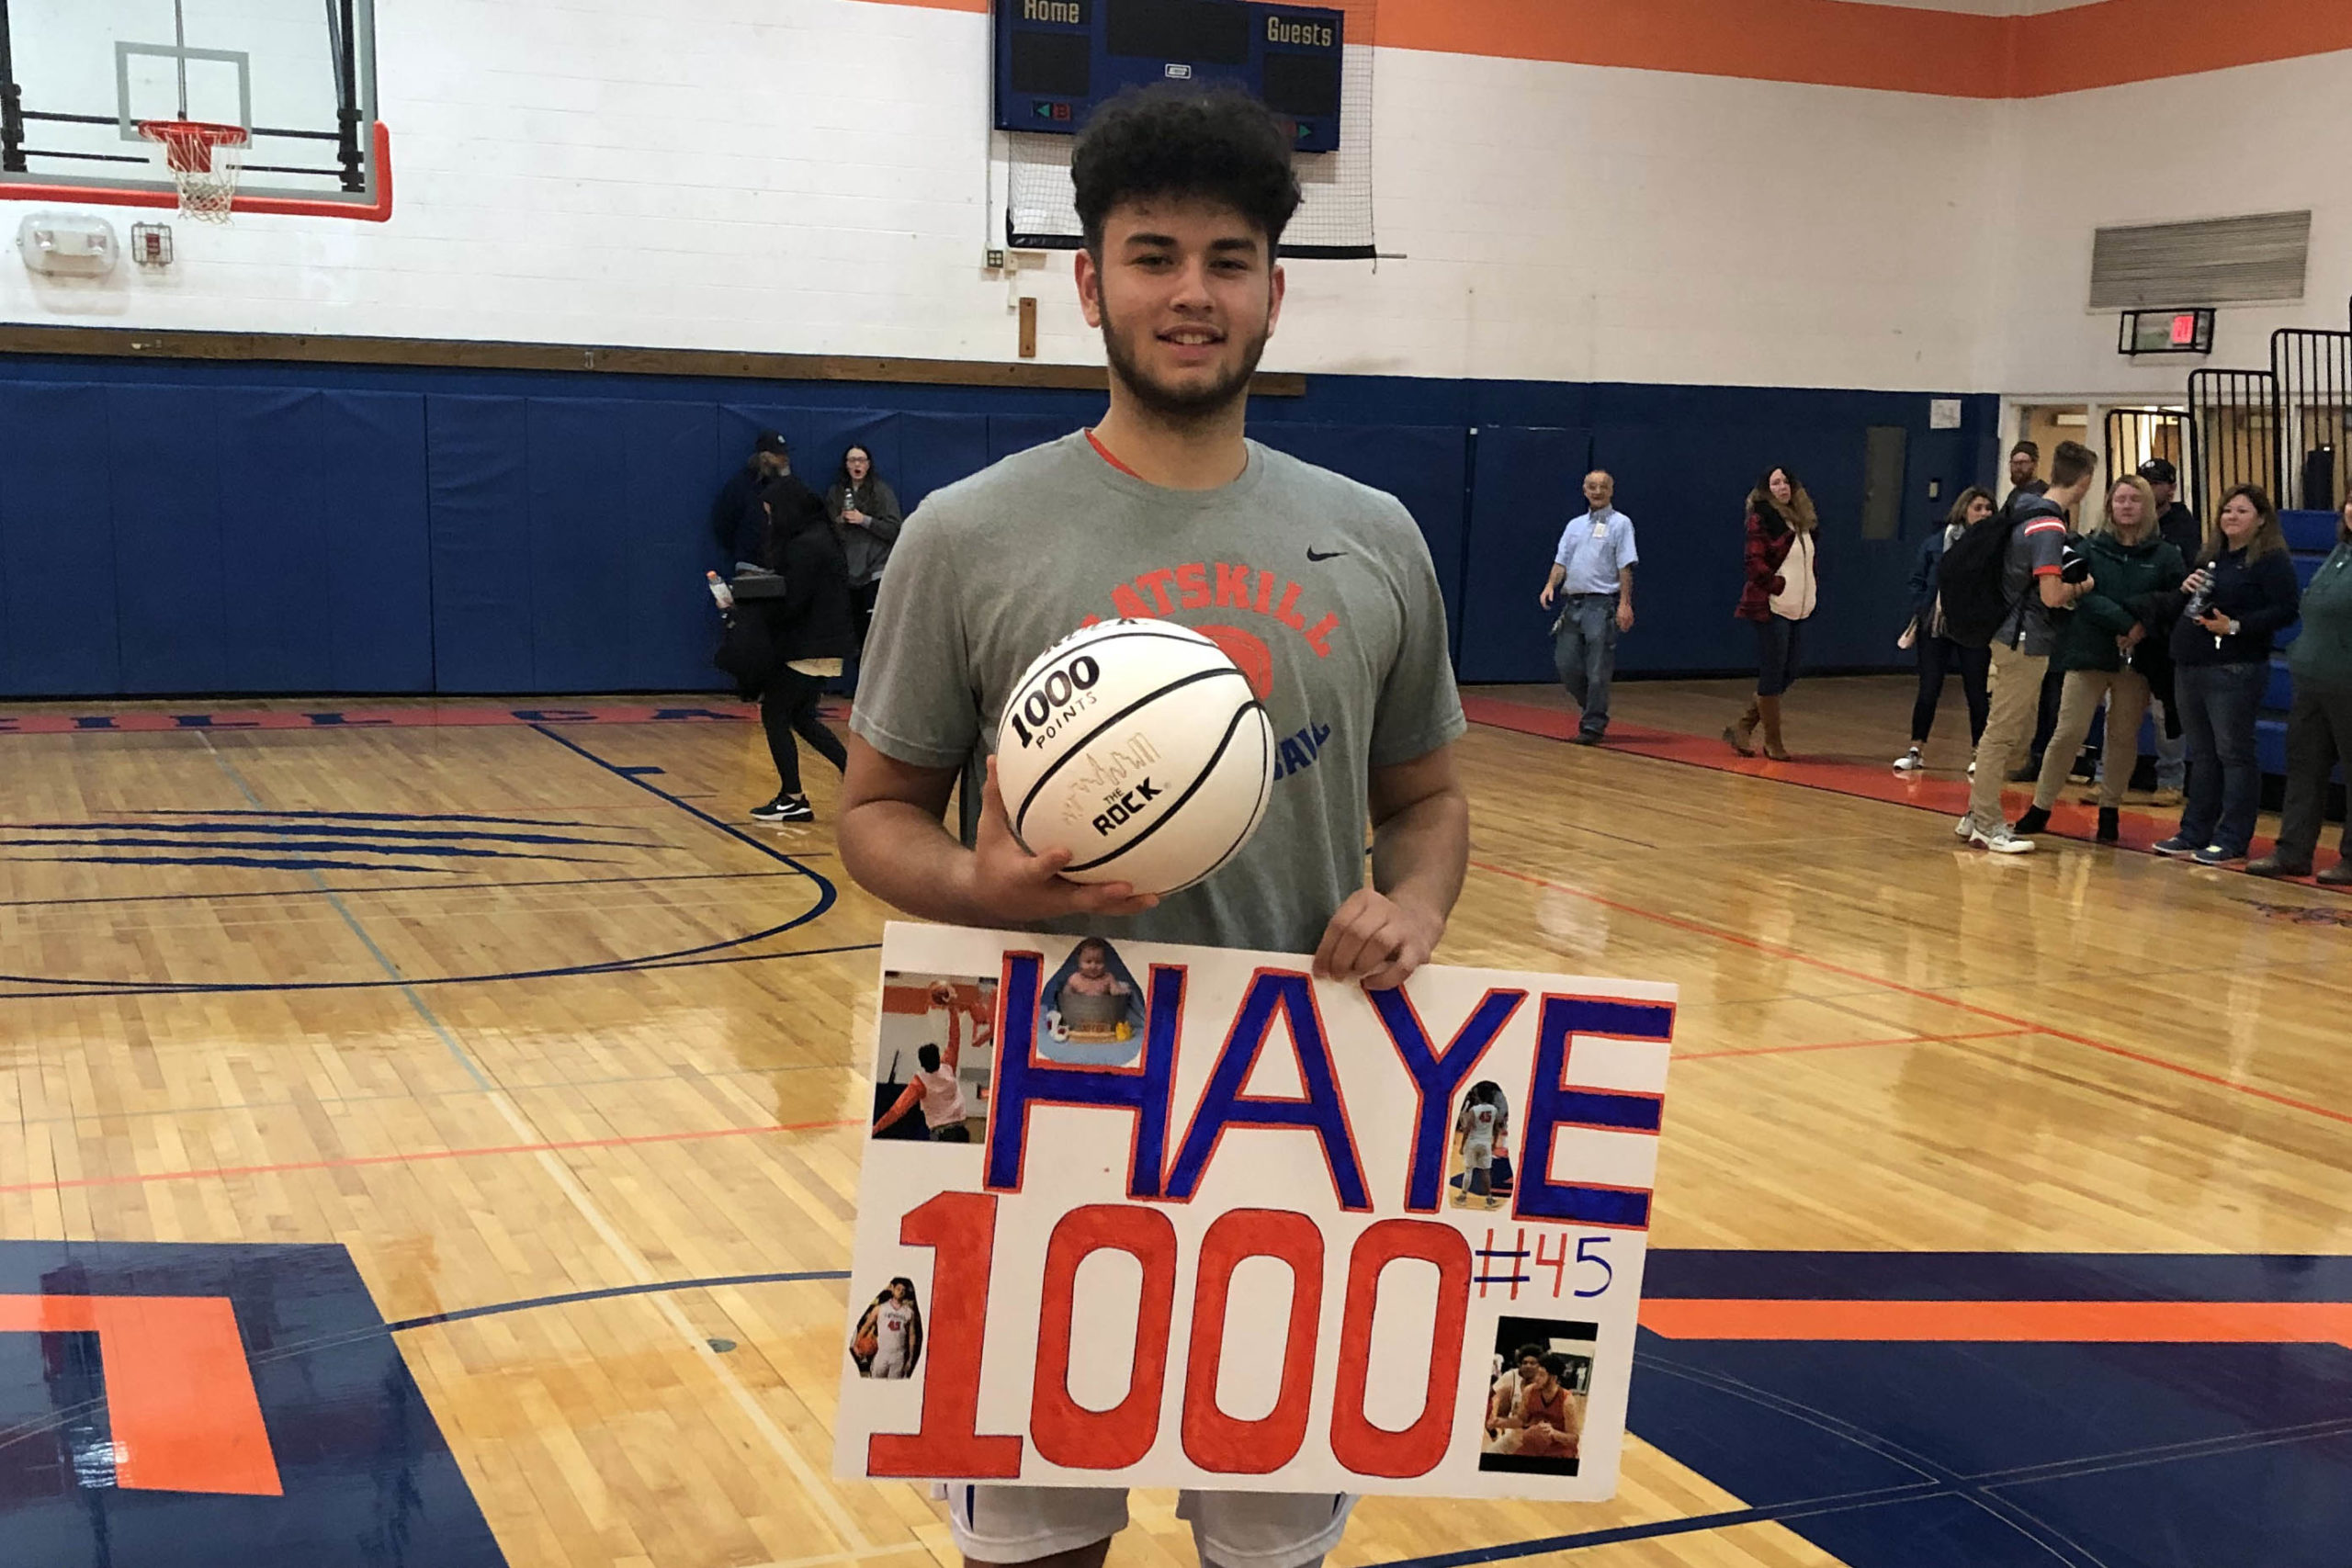 Devon Haye holding 1,000 basketball and sign that says Haye 1000